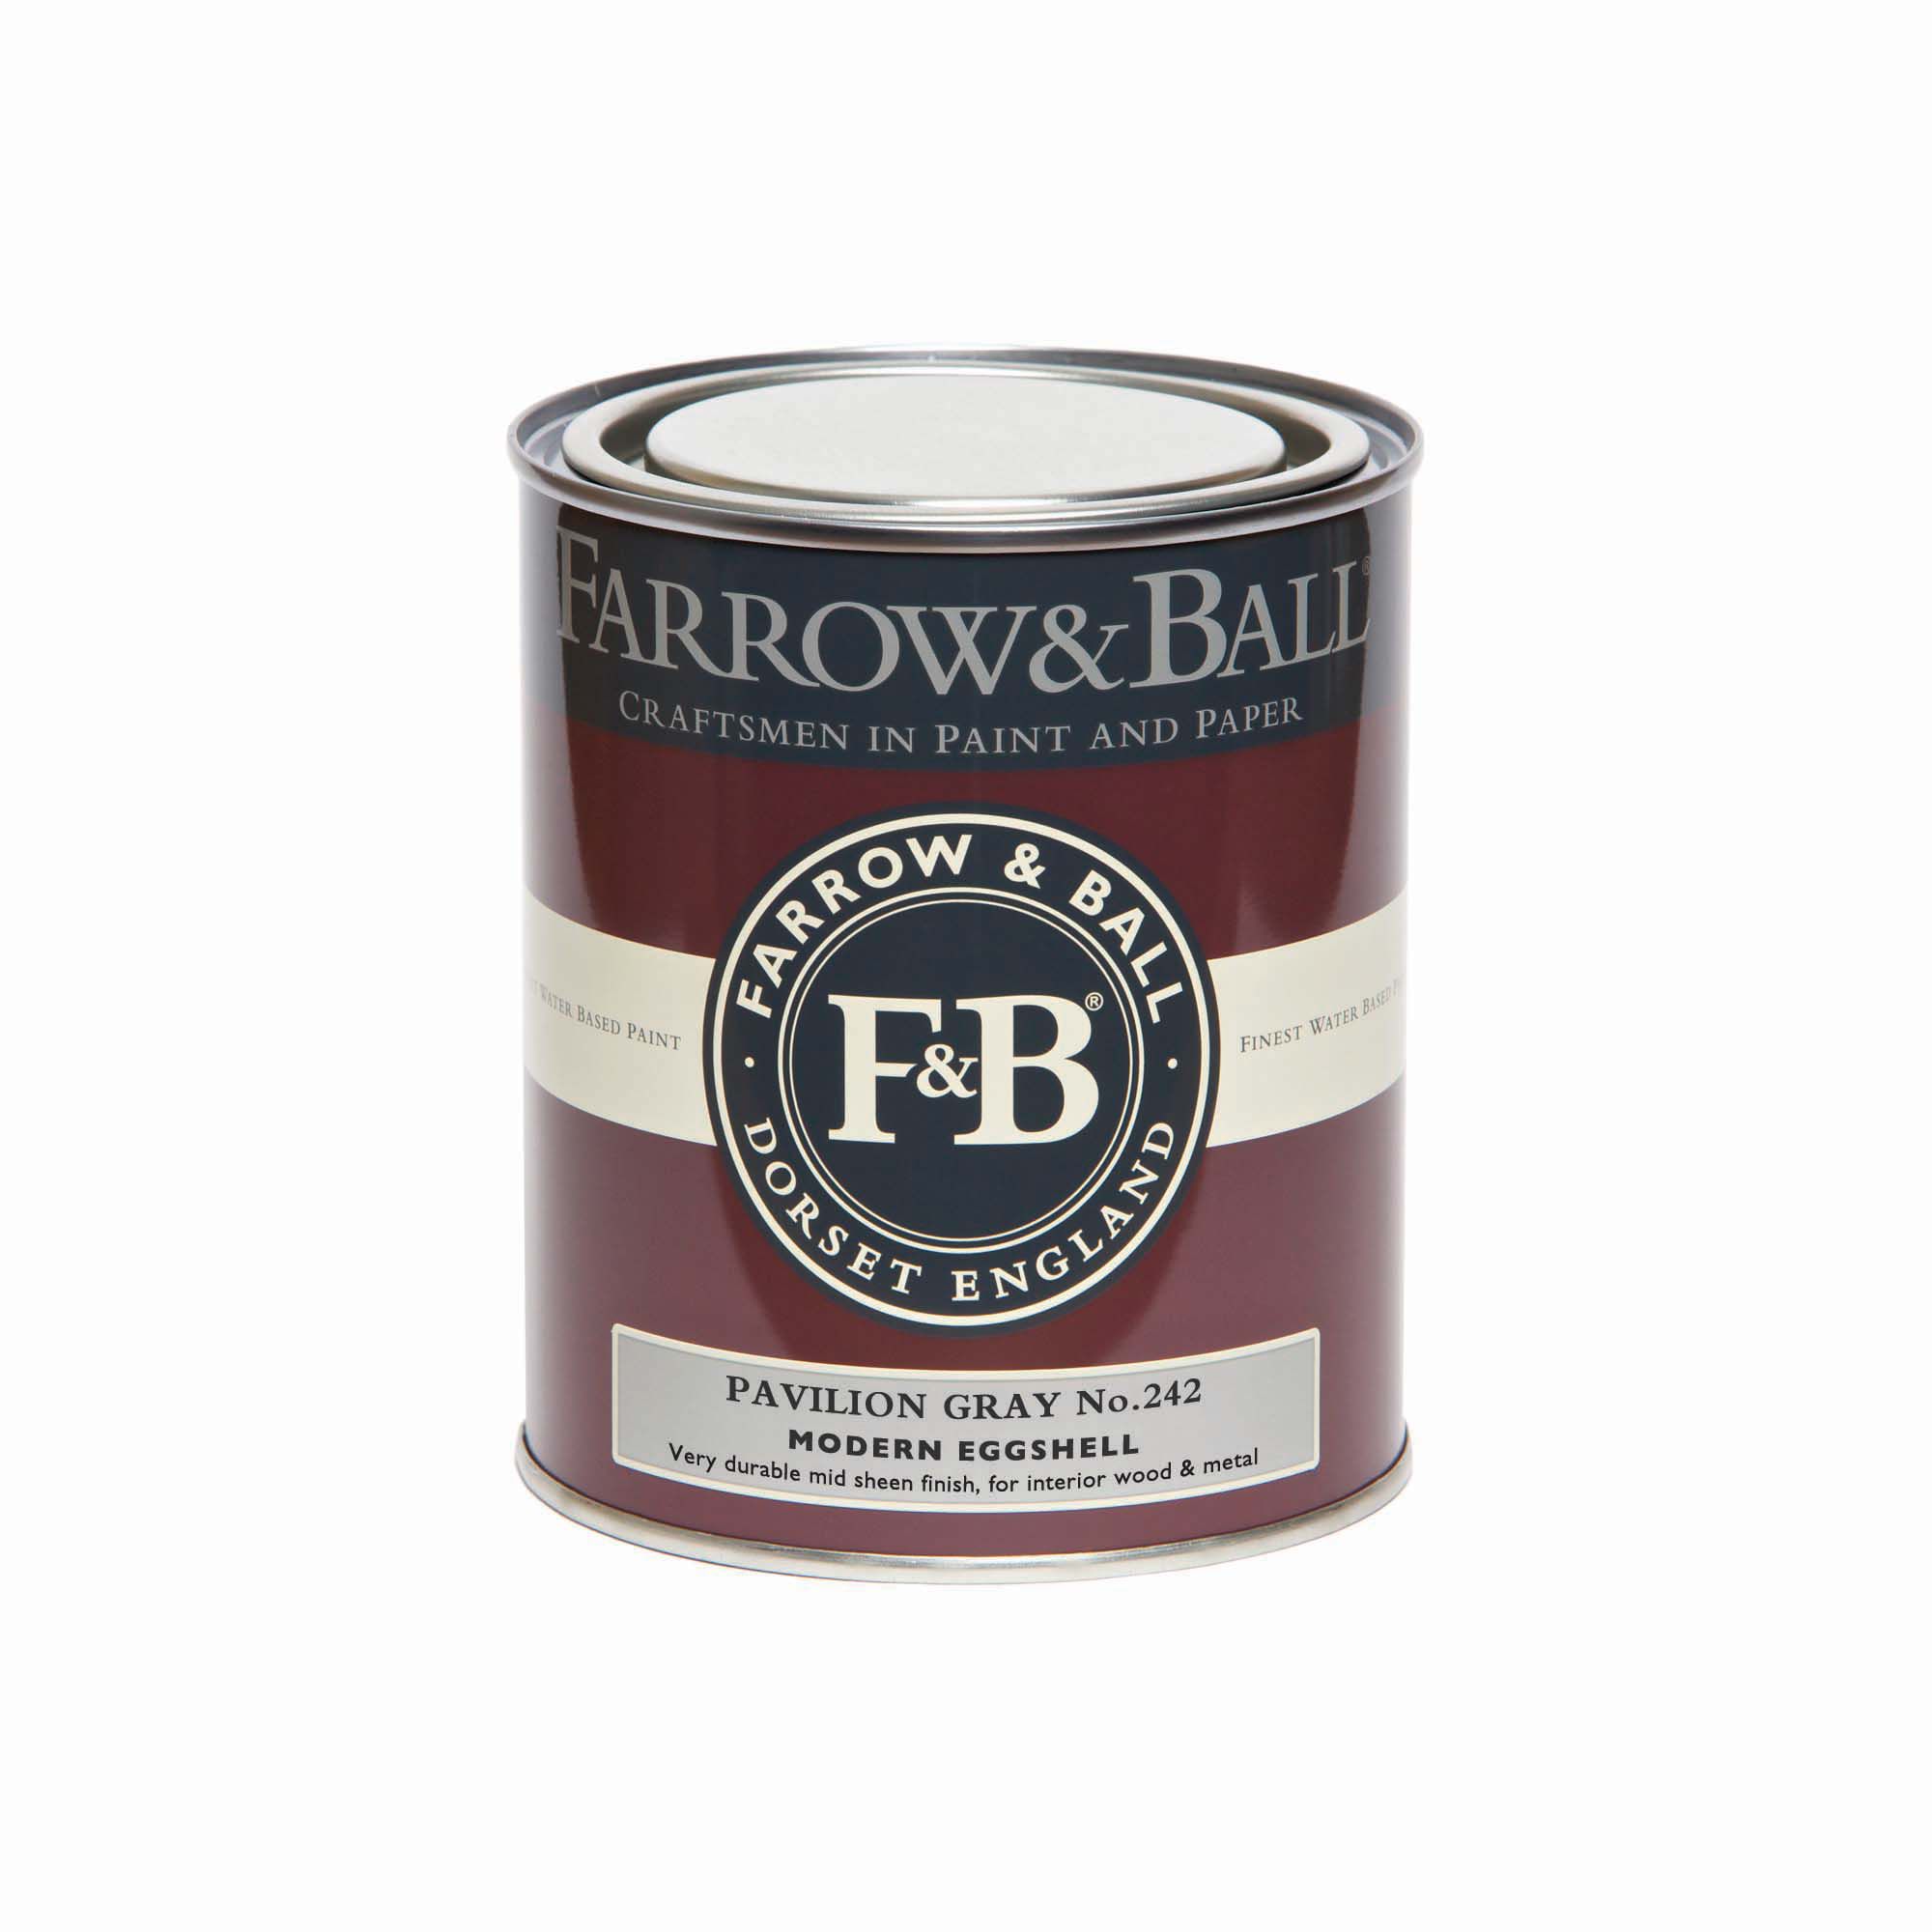 Farrow & Ball Modern Pavilion Gray No.242 Eggshell Paint, 750ml